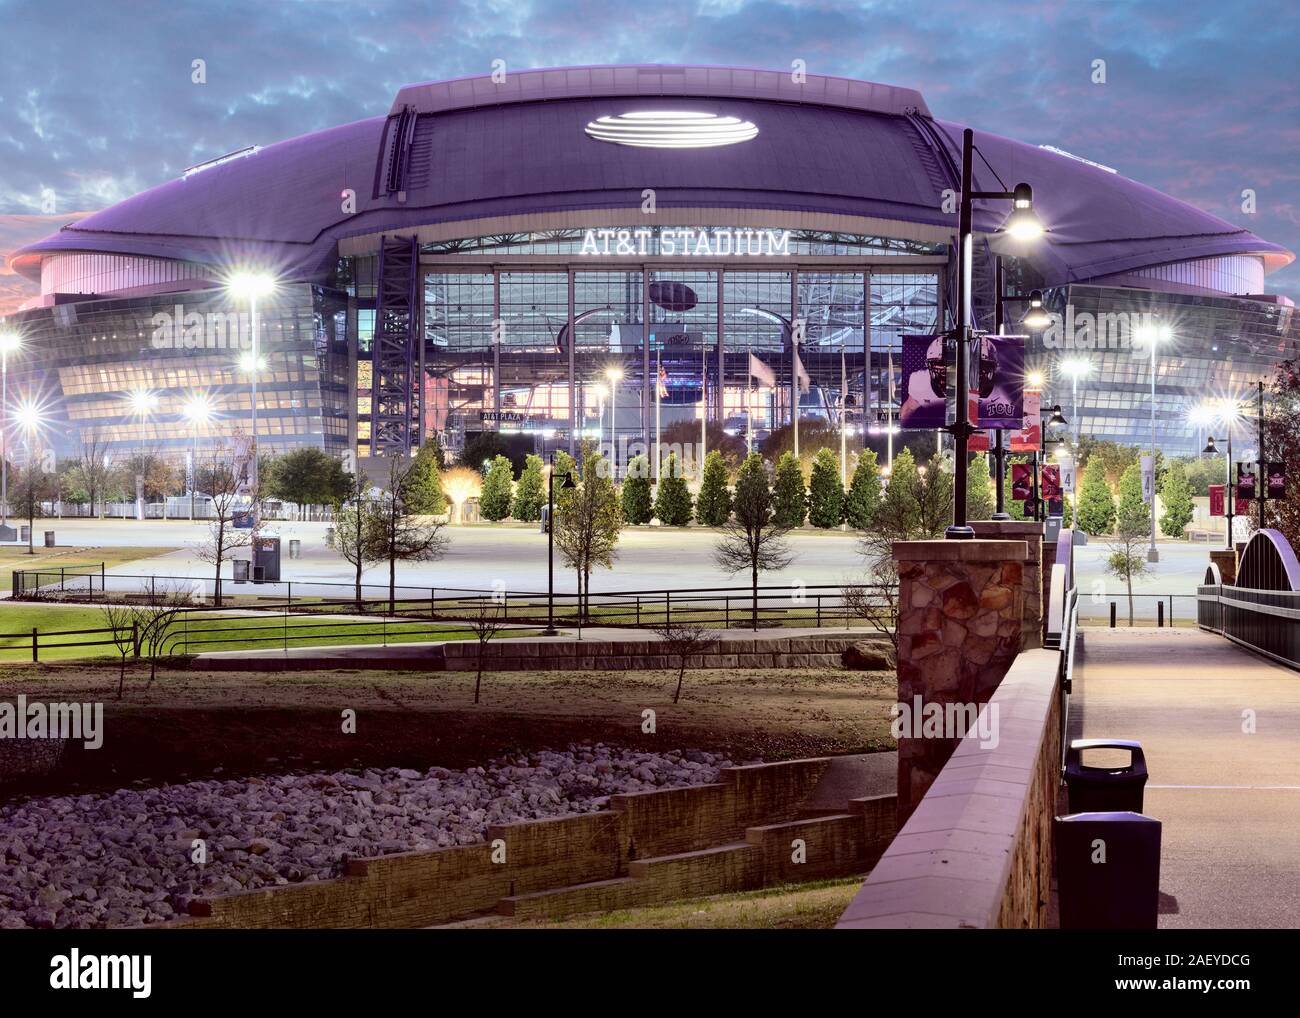 At&t Stadium Dallas Cowboys Stock Photo